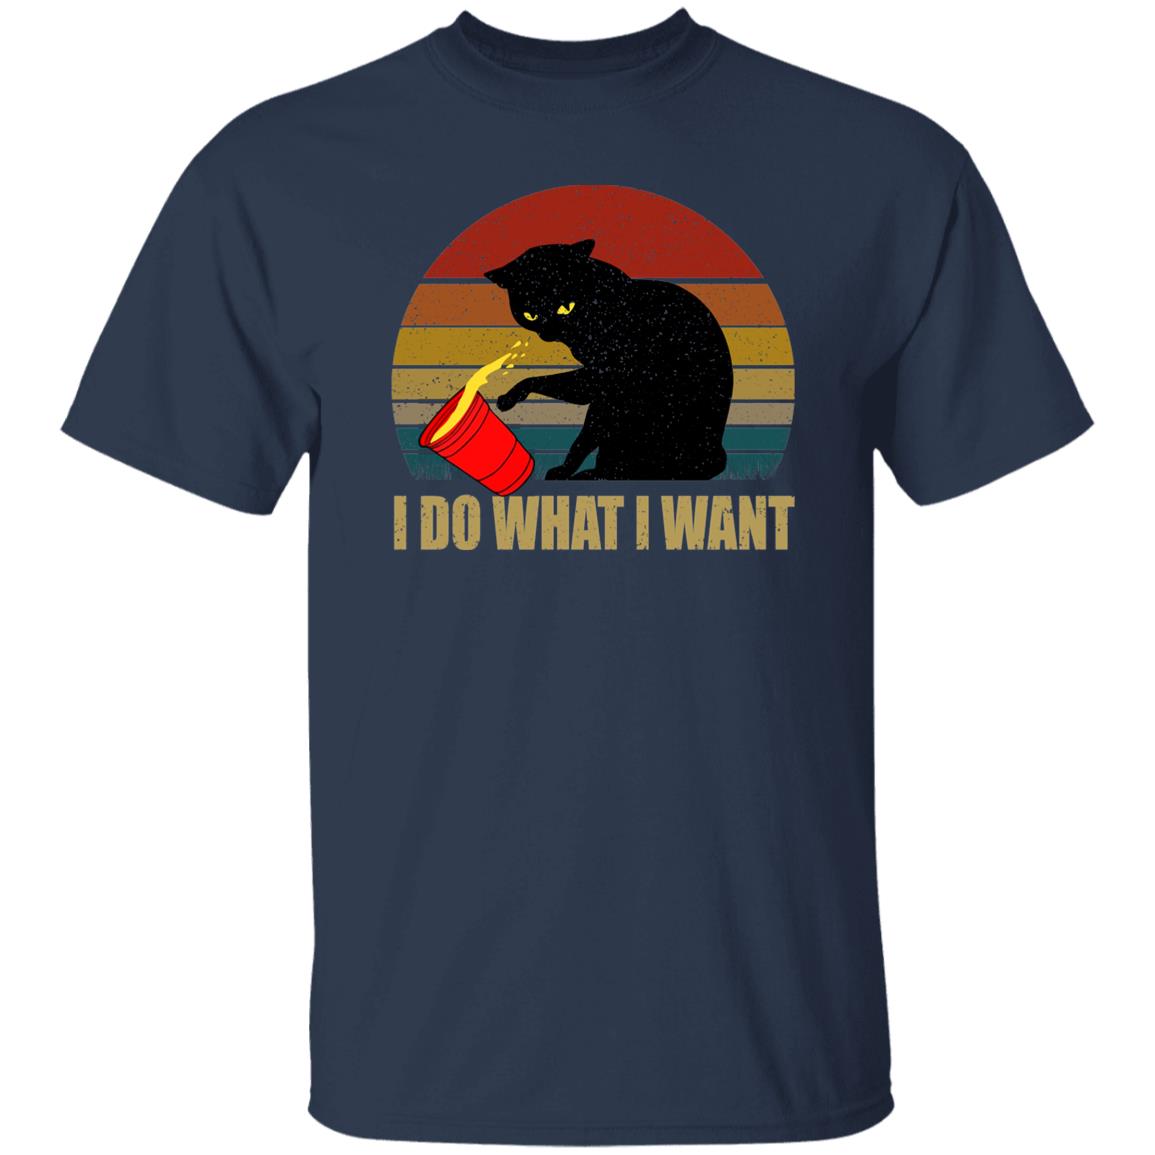 I do what I want T-Shirt gift Retro Sneaky Cat Black cat mom Unisex Tee Black Navy Dark Heather-Family-Gift-Planet